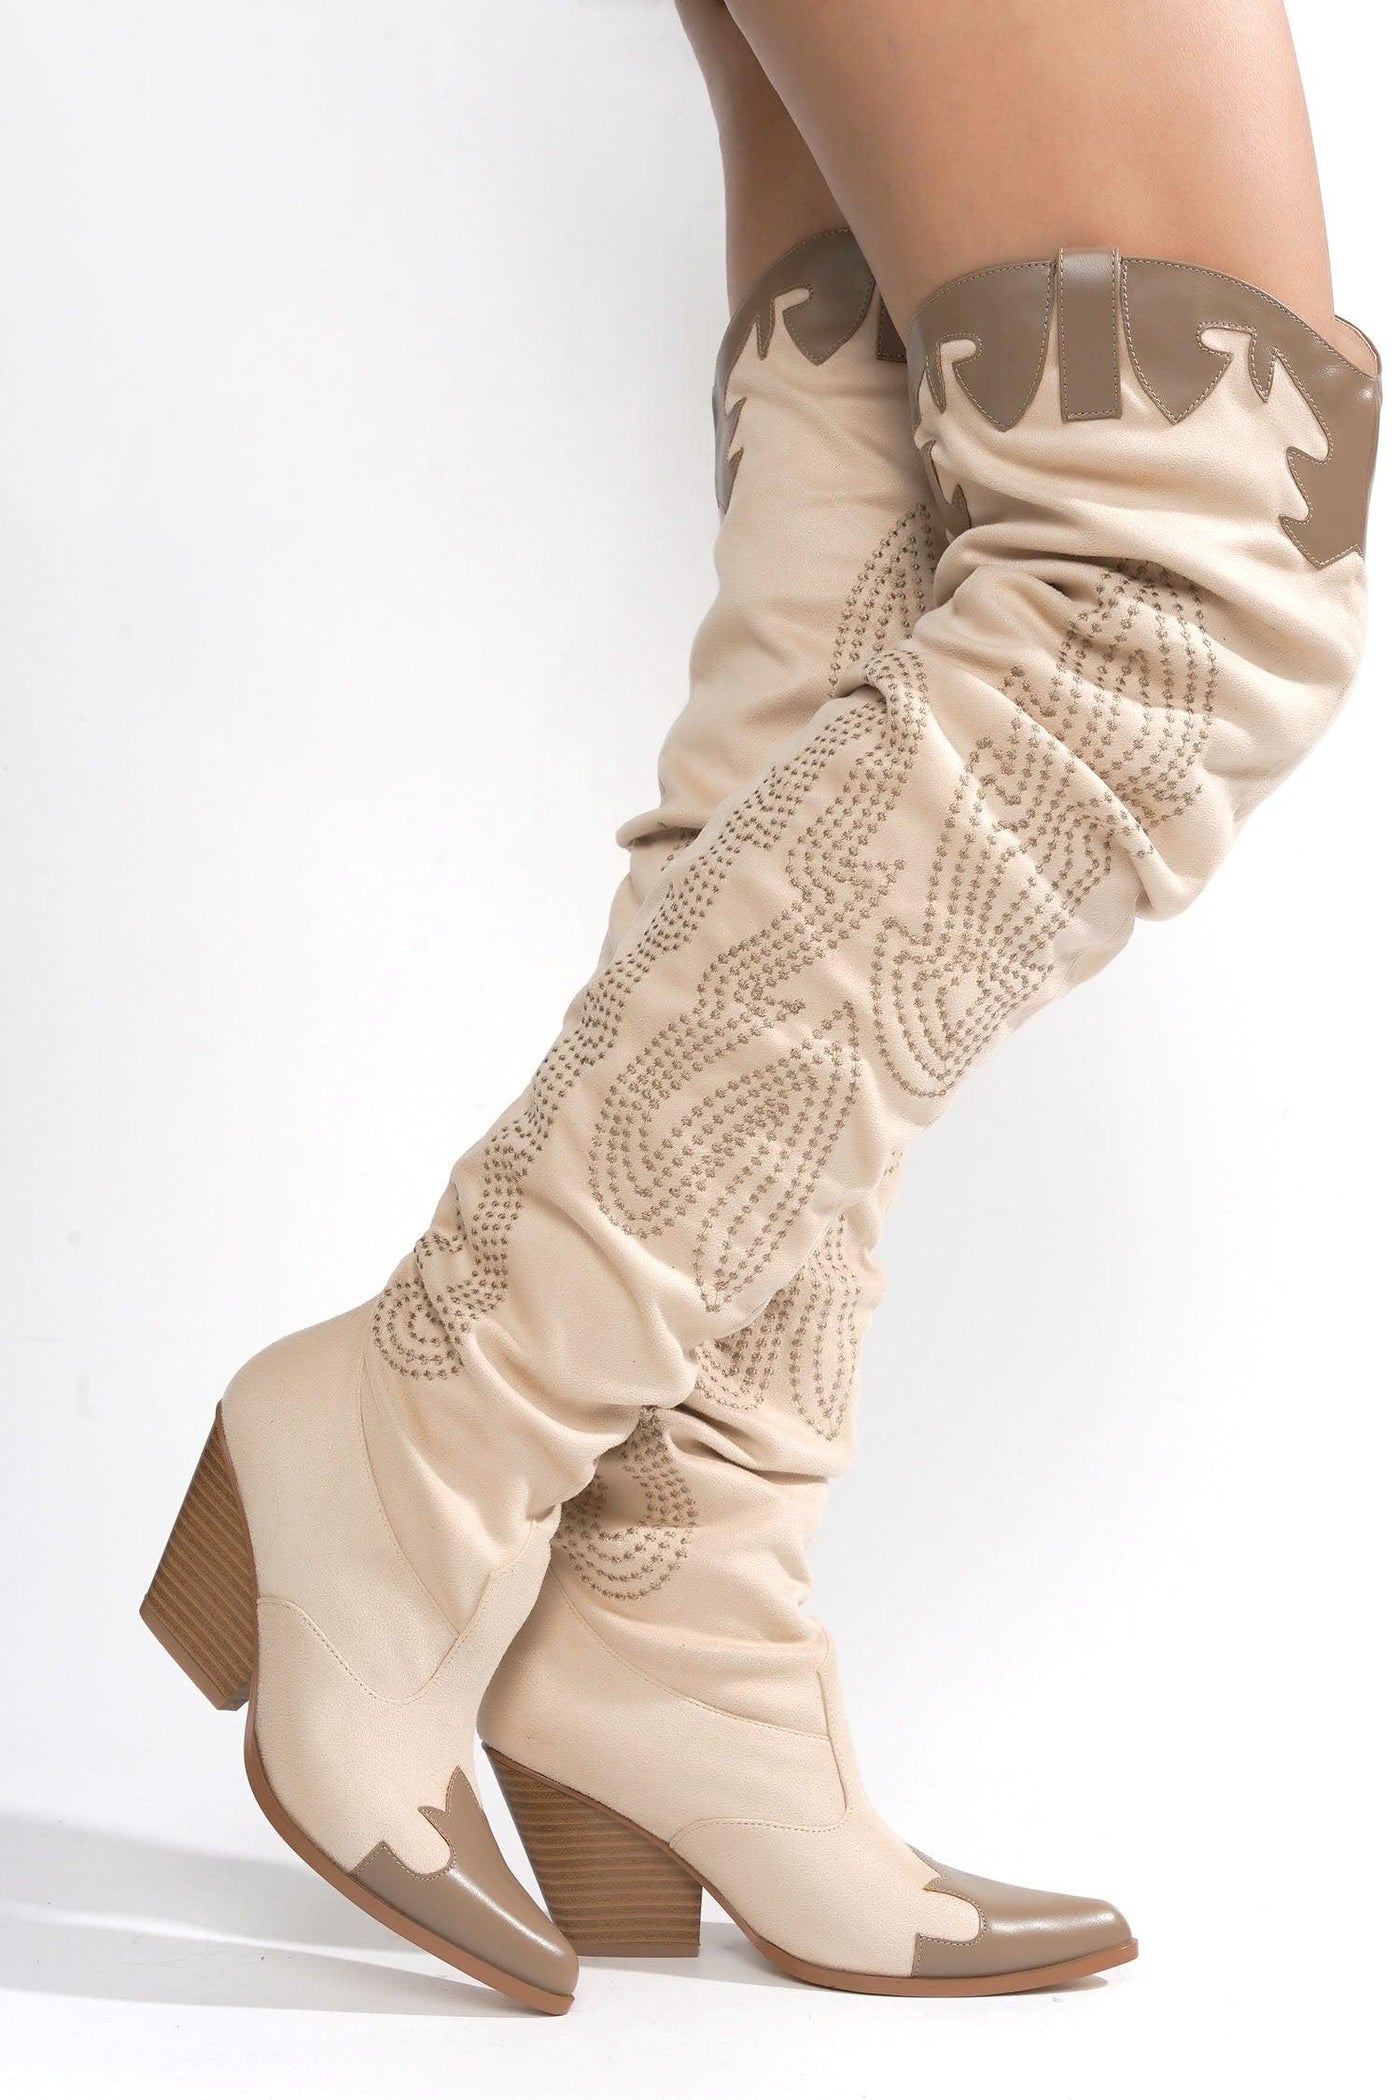 ICONA - CREAM Thigh High Boots